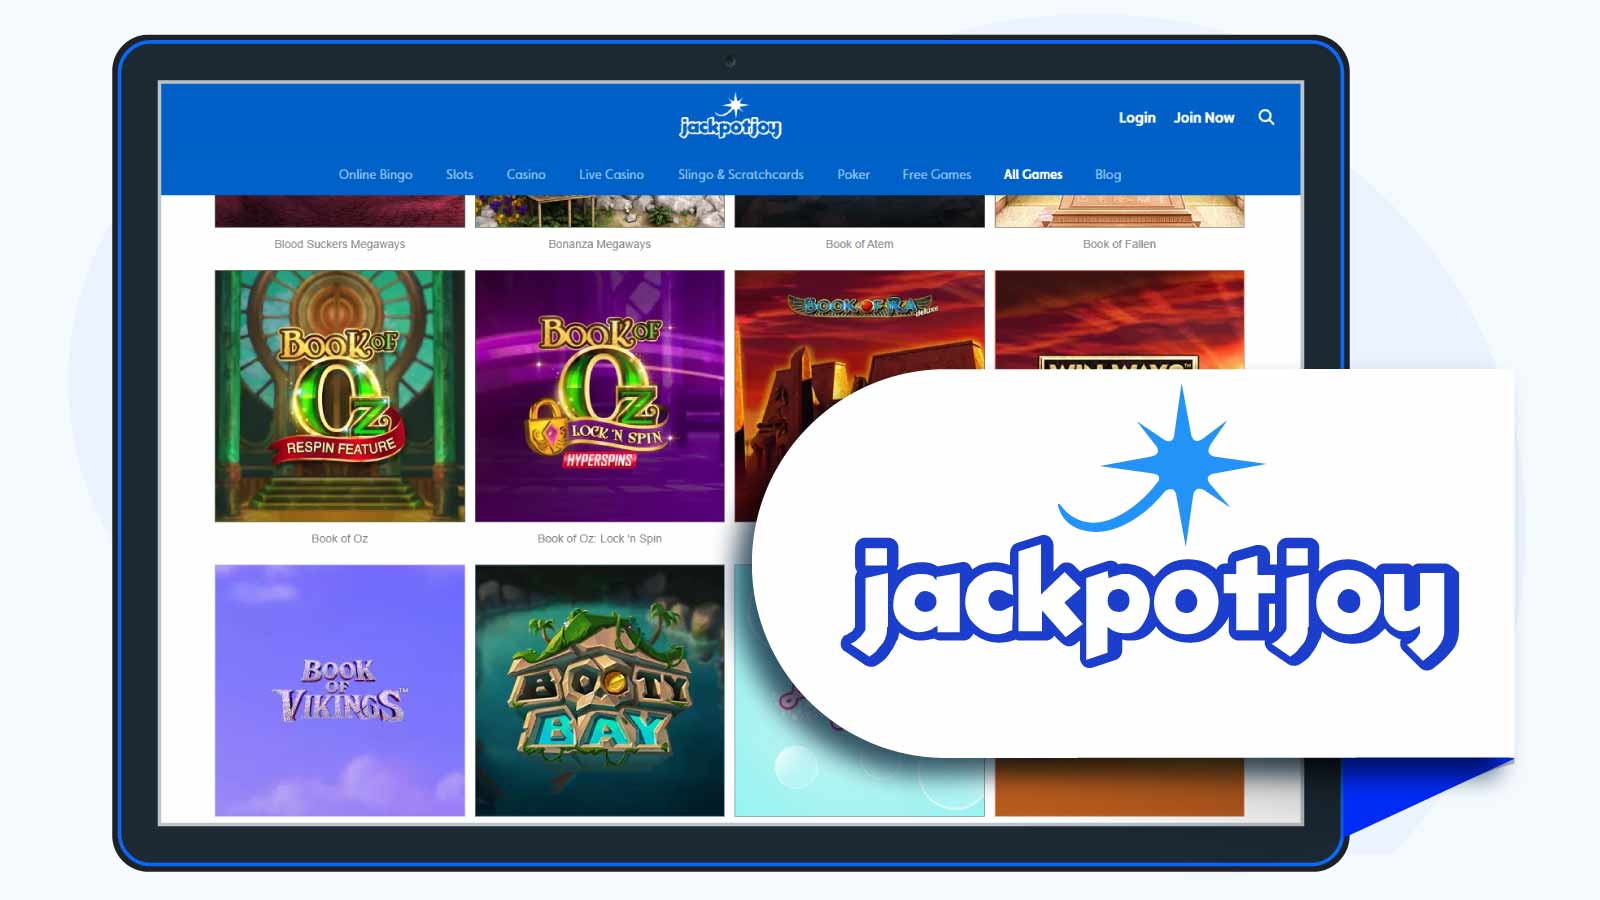 JackpotJoy – A Leading Online Spot for Novomatic Games